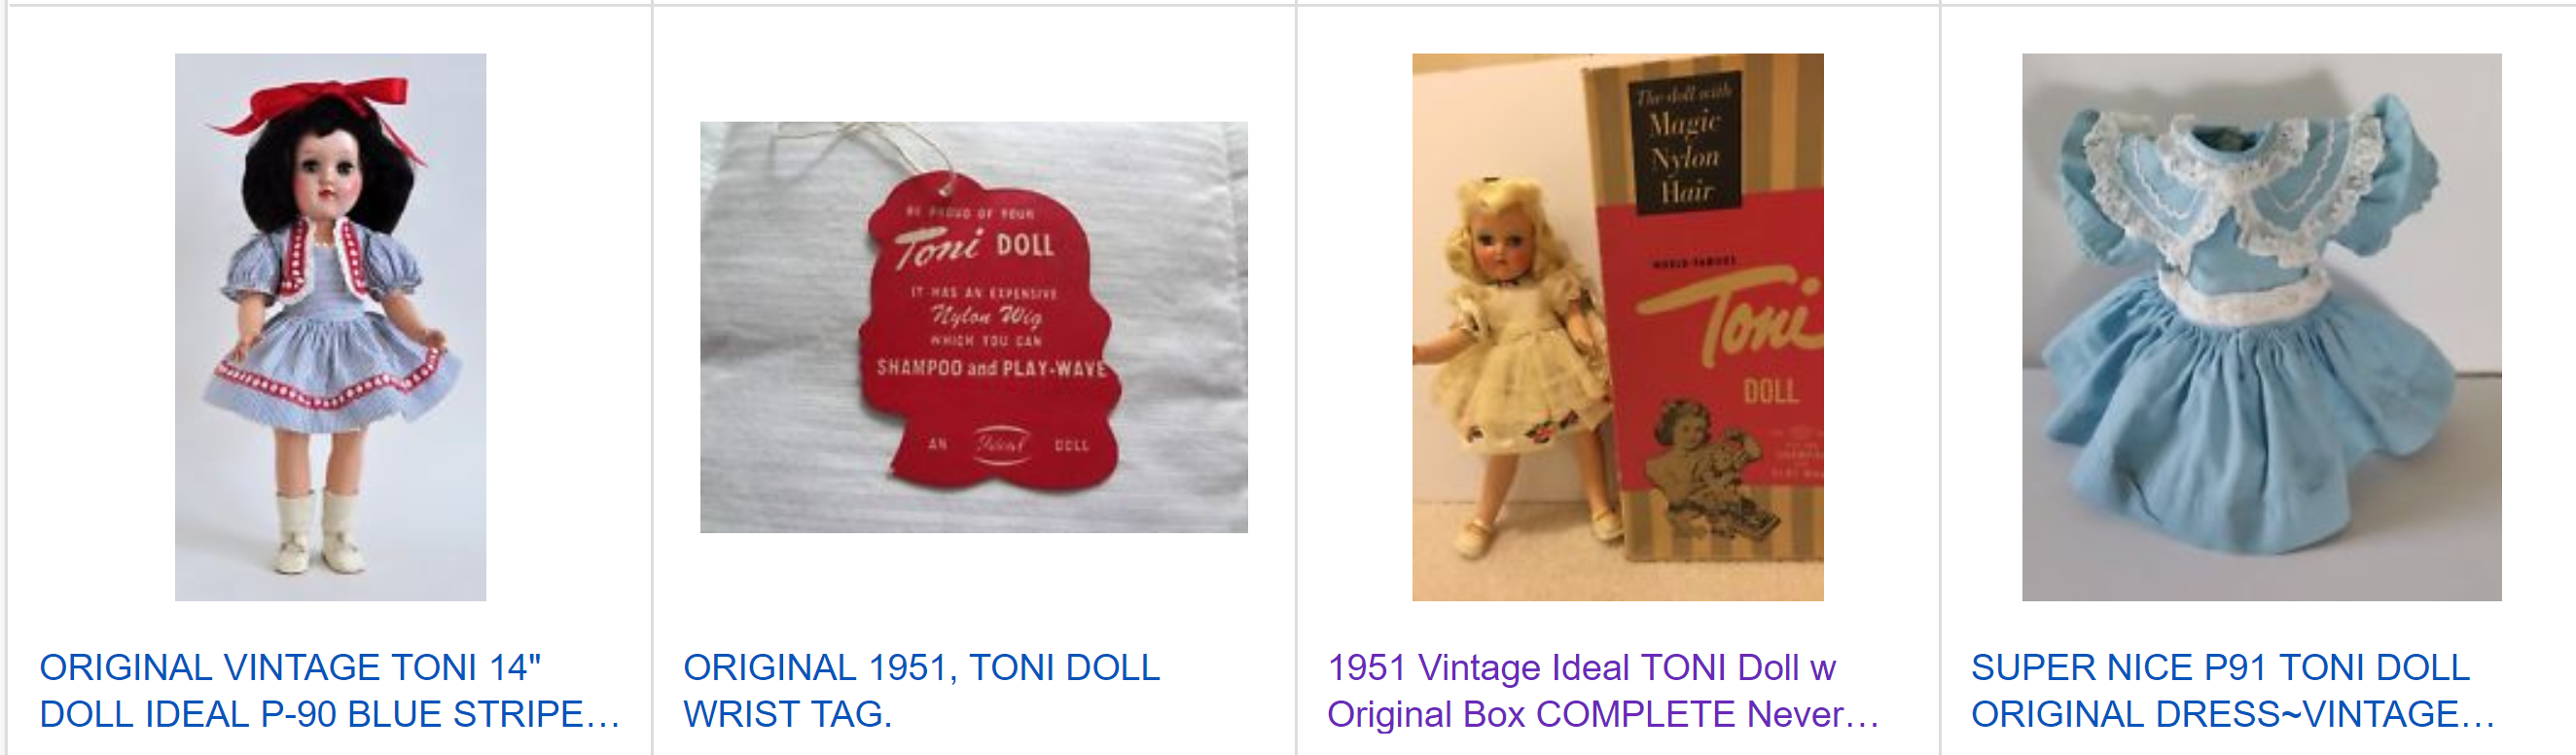 Ebay Vintage Dolls Flash Sales, 56% OFF | www.ingeniovirtual.com